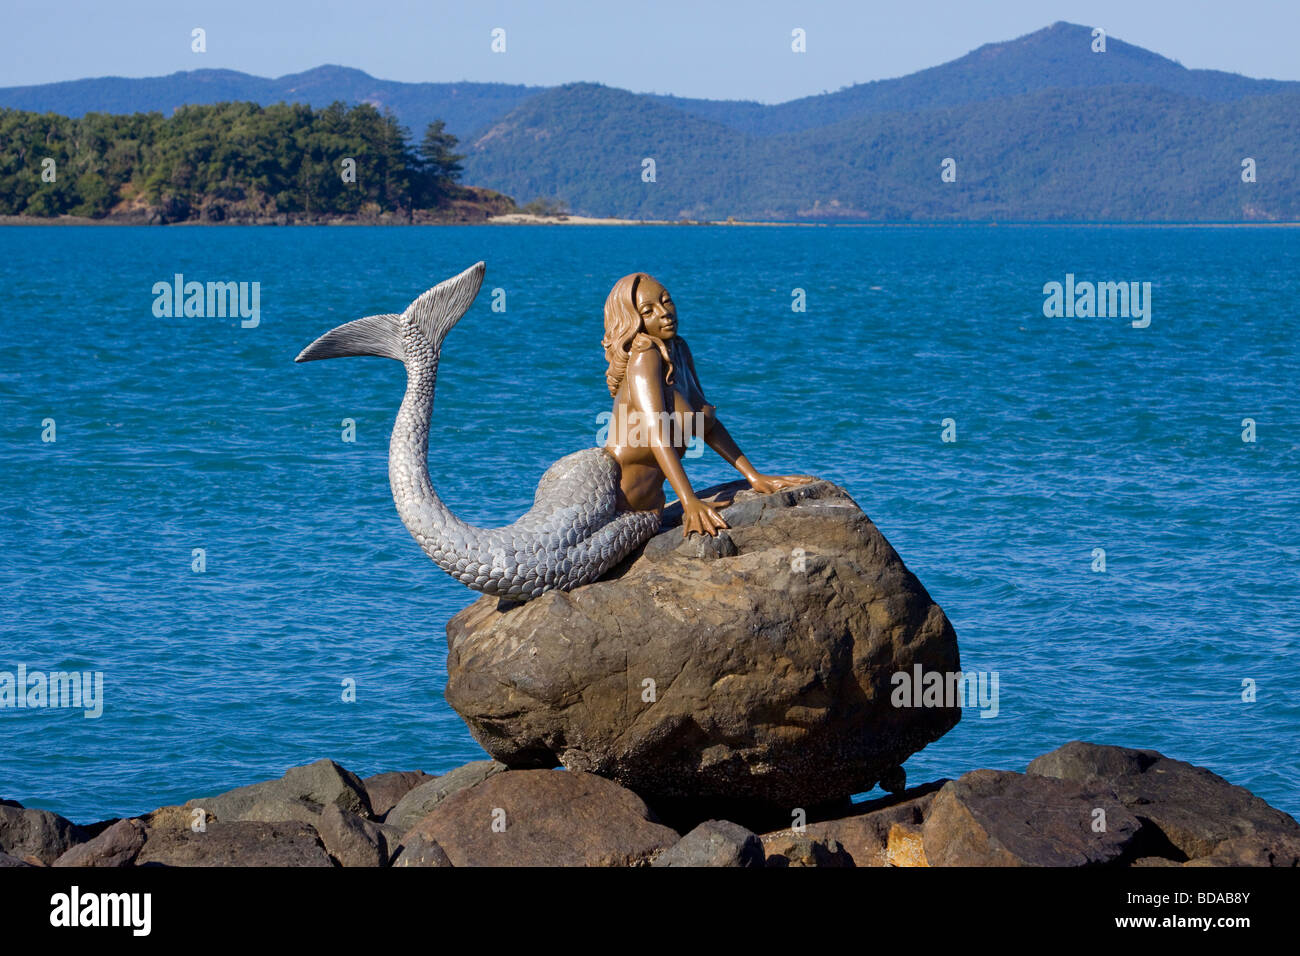 Daydream island Whitsundays Queensland mermaid Stock Photo